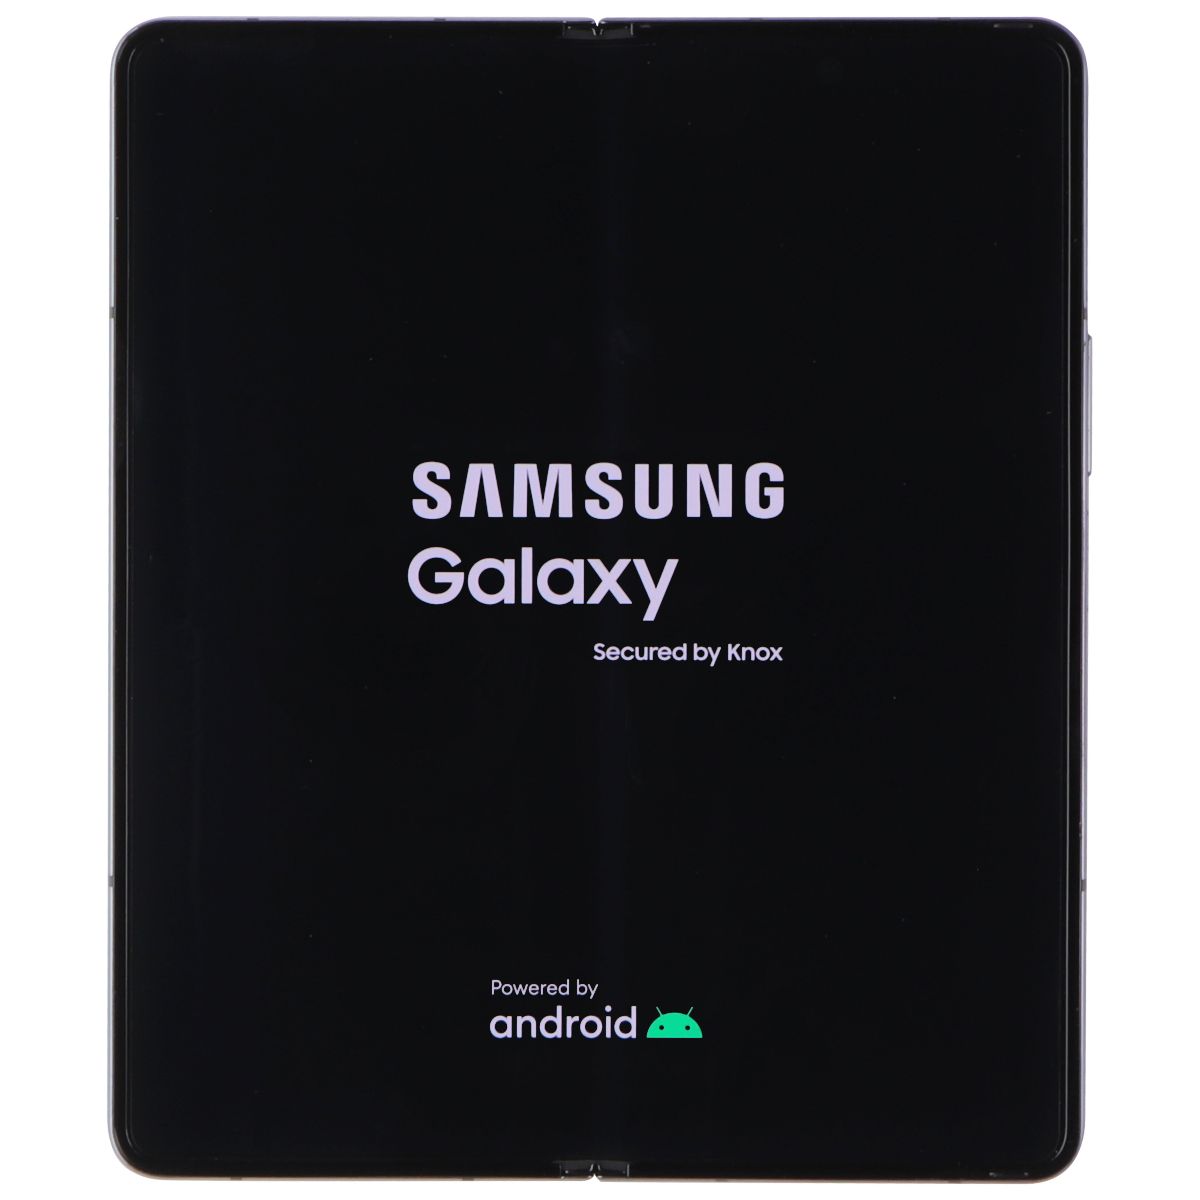 DEMO Samsung Galaxy Z Fold4 (7.6-inch) Smartphone SM-F936U 256GB / Gray Cell Phones & Smartphones Samsung    - Simple Cell Bulk Wholesale Pricing - USA Seller